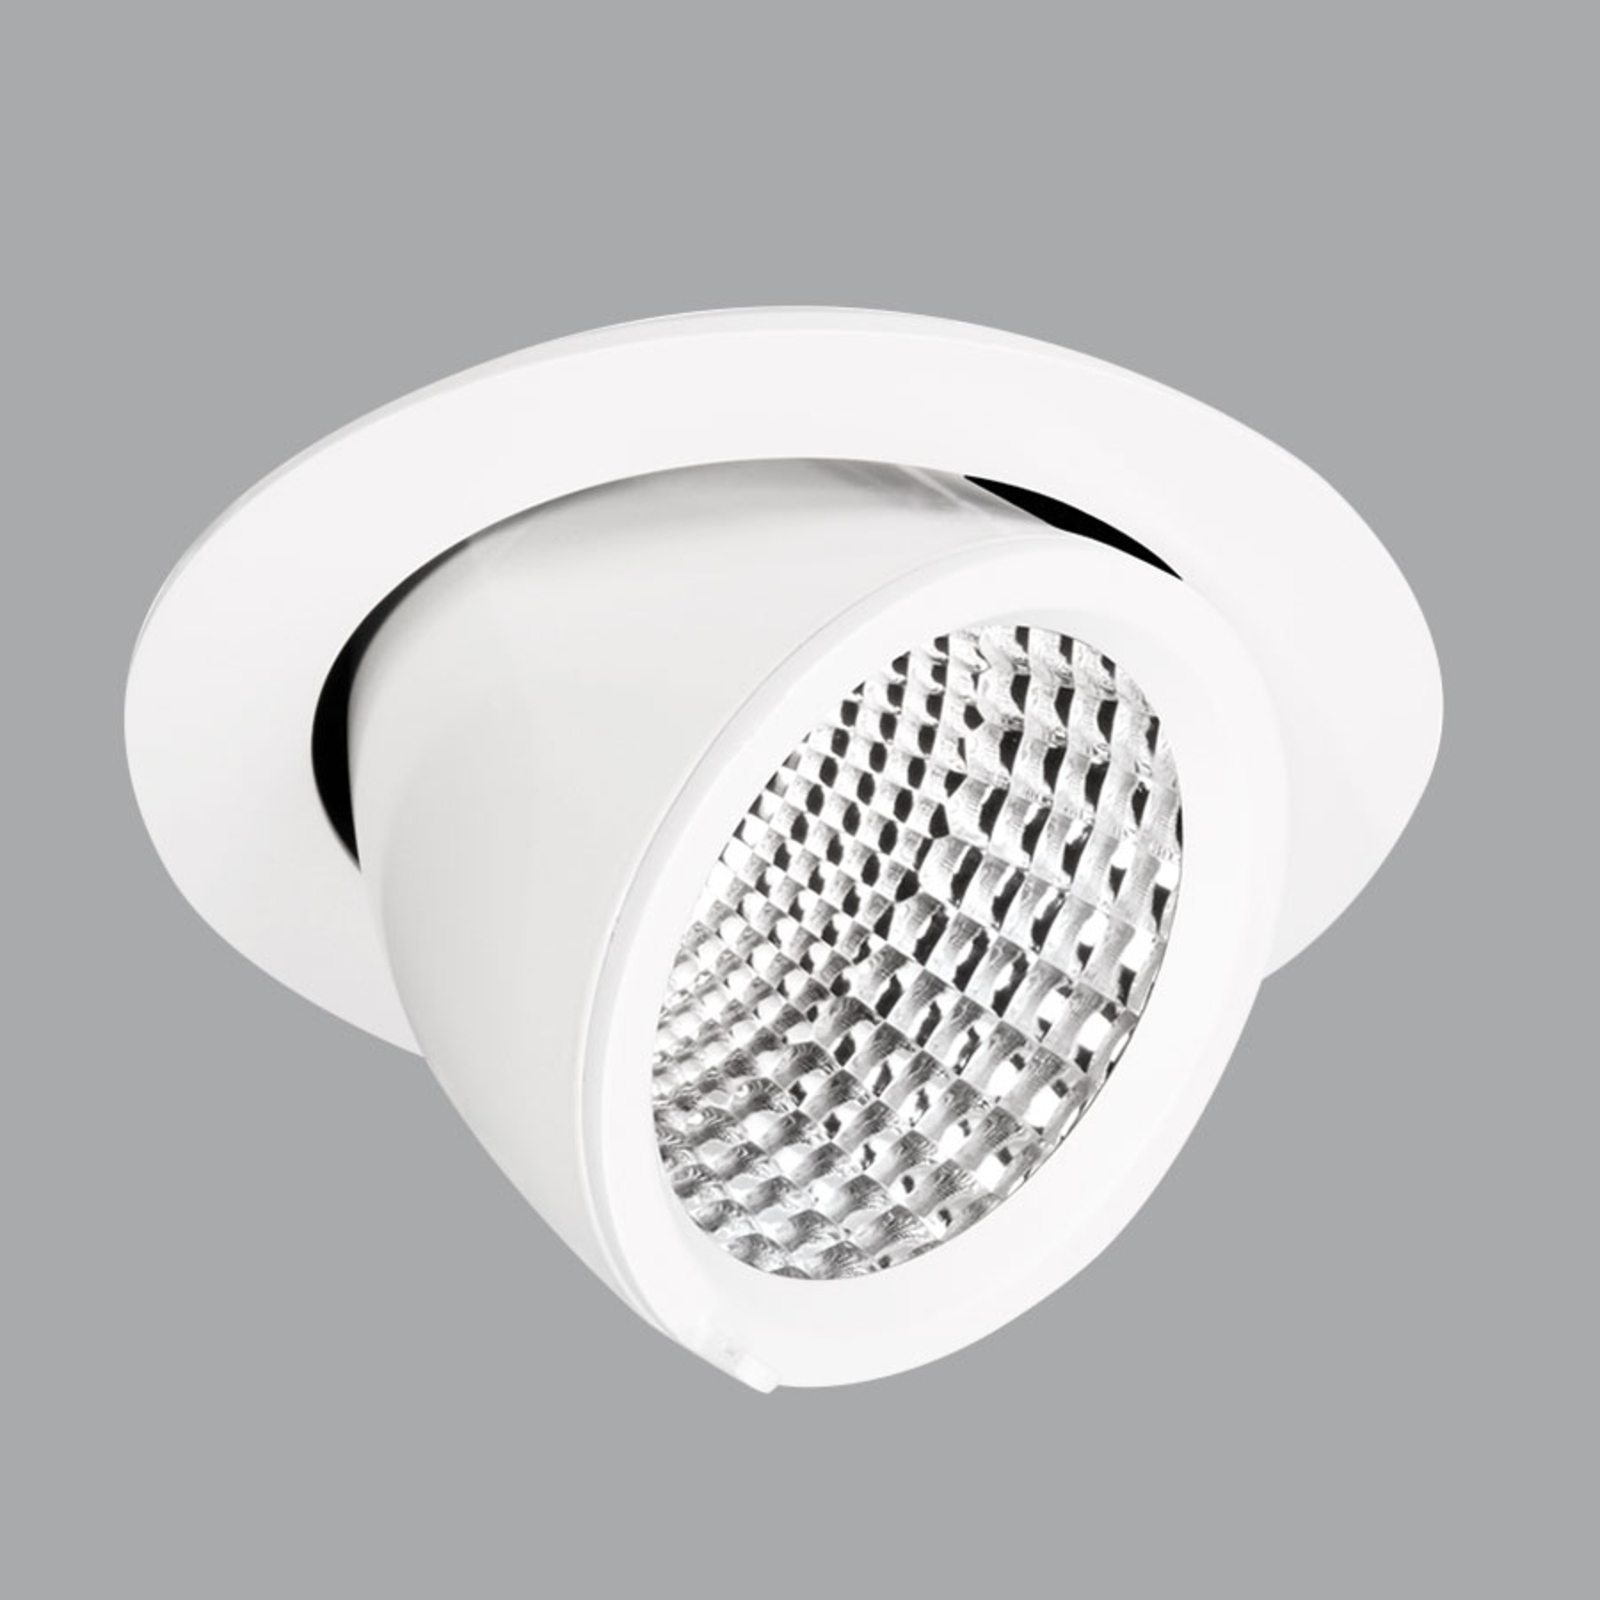 Spot reflector - EB433 downlight LED white 3,000 K